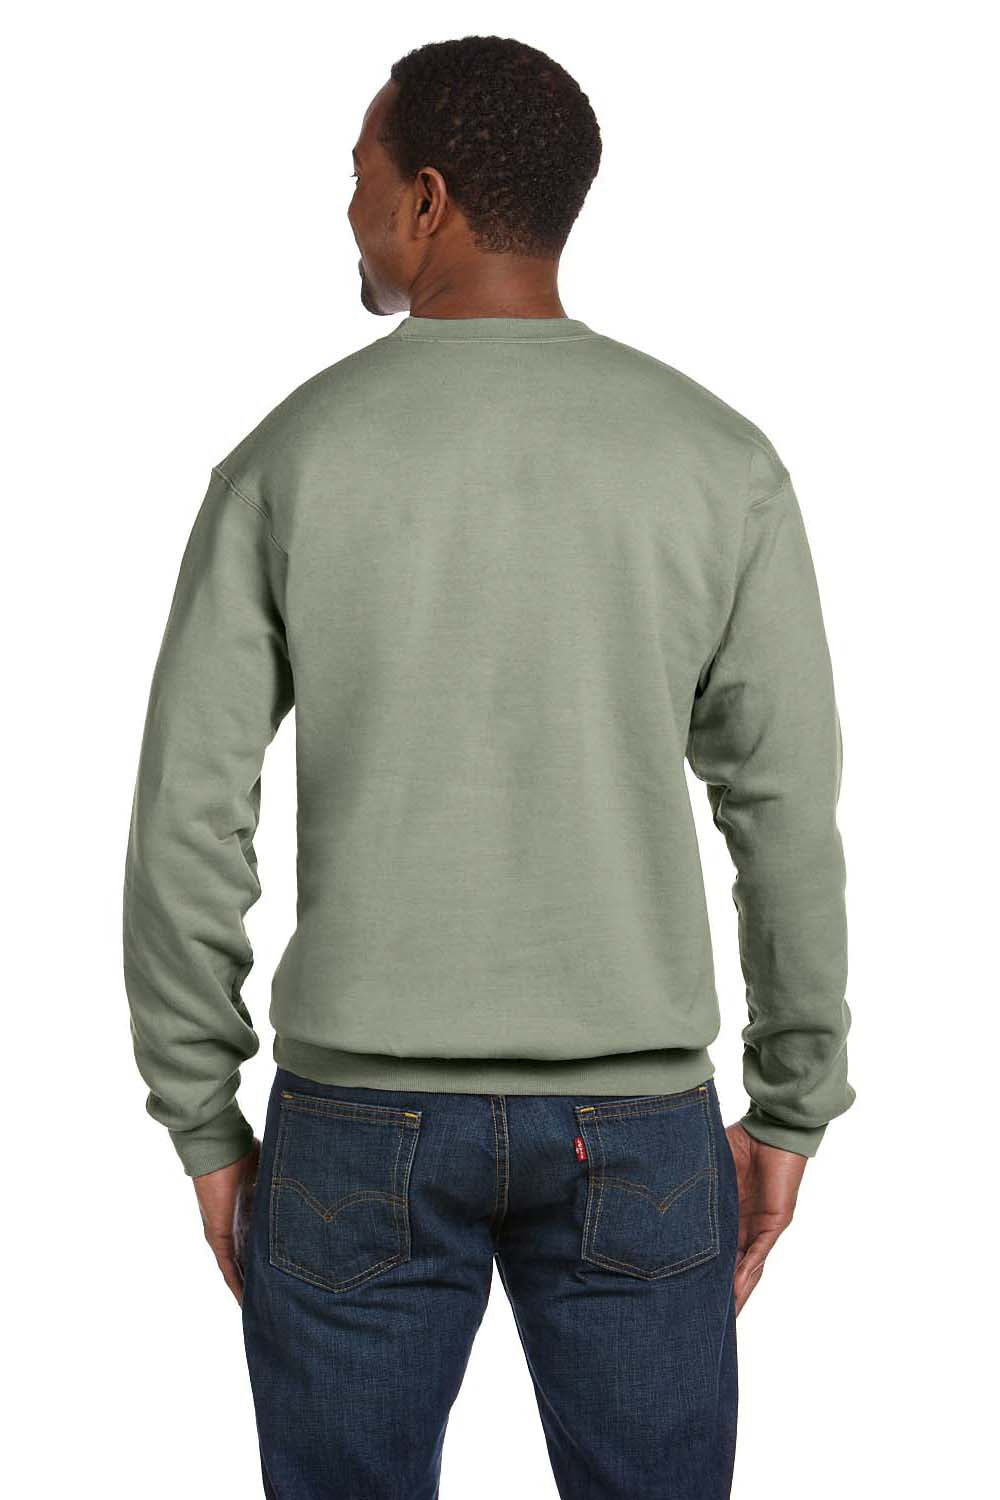 Hanes P160 Mens EcoSmart Print Pro XP Fleece Crewneck Sweatshirt Stonewashed Green Back